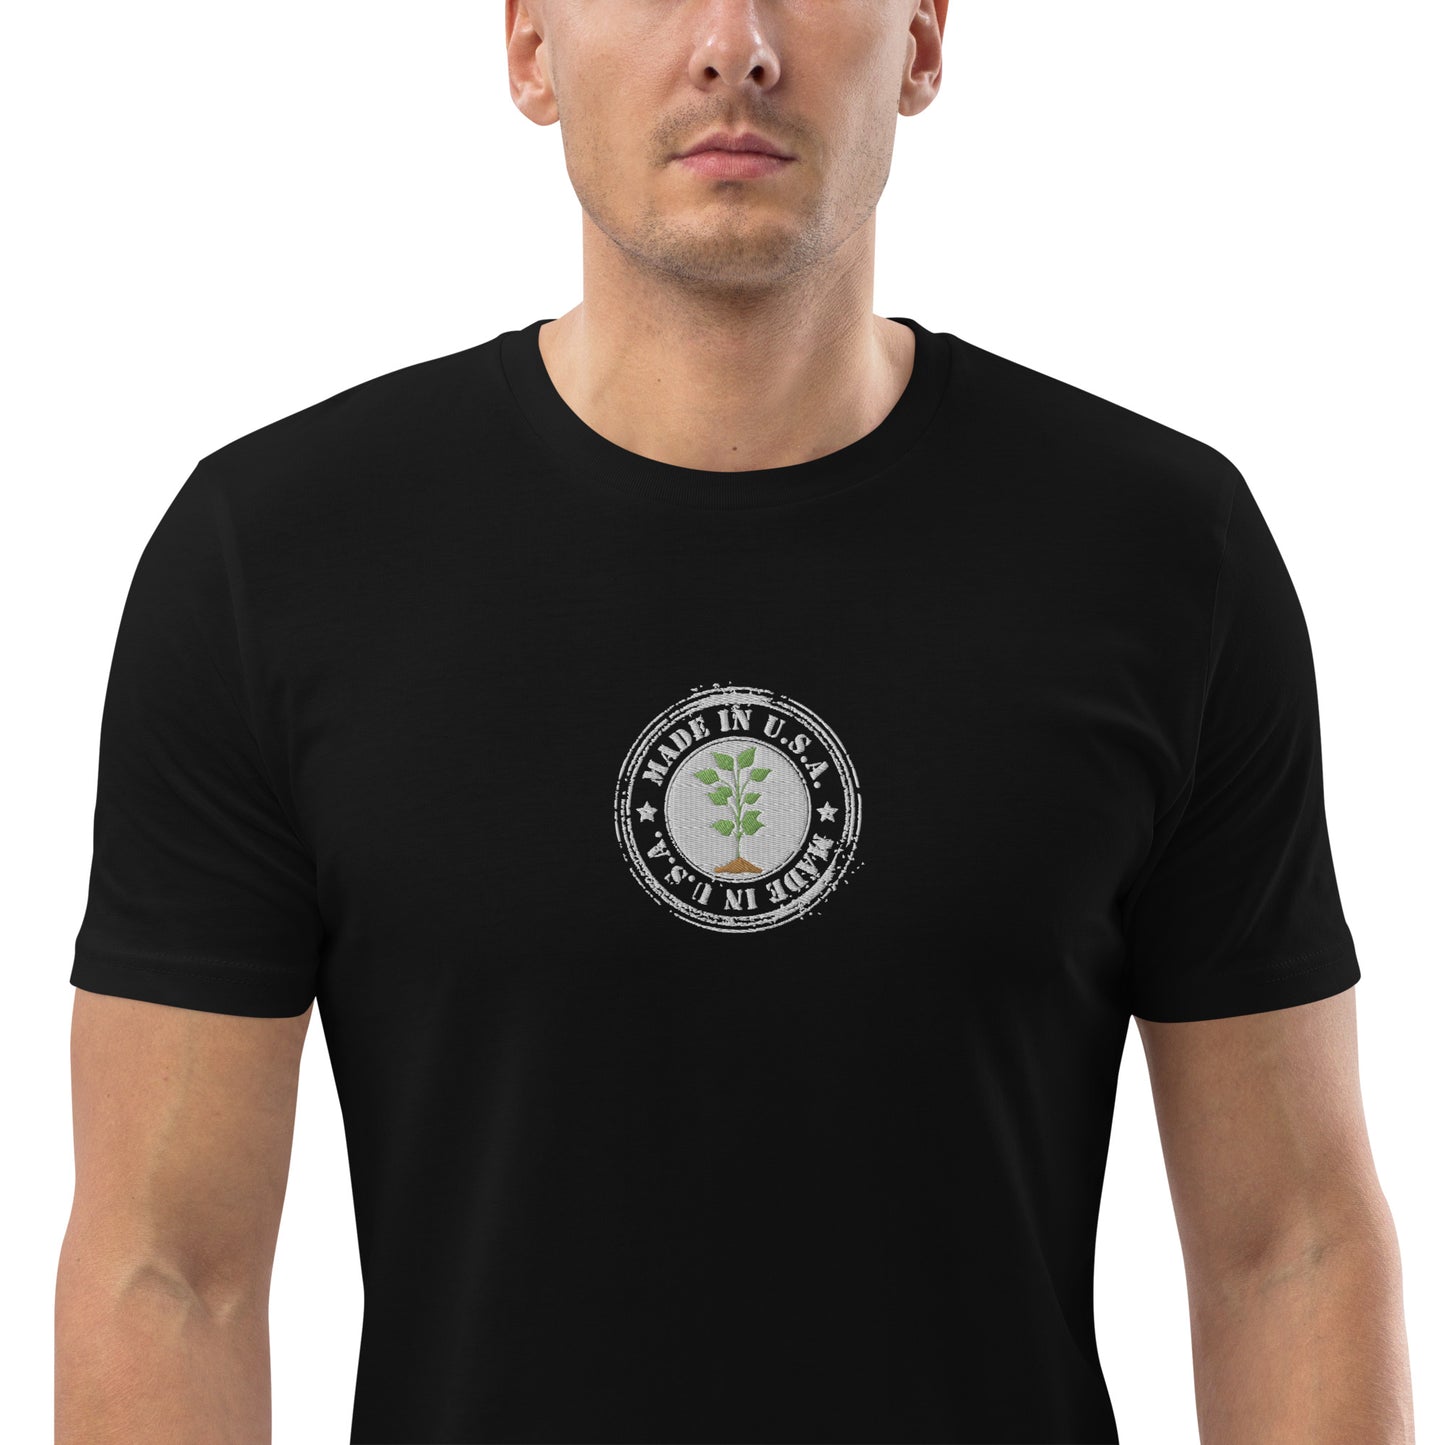 Camiseta de algodón orgánico Hombre